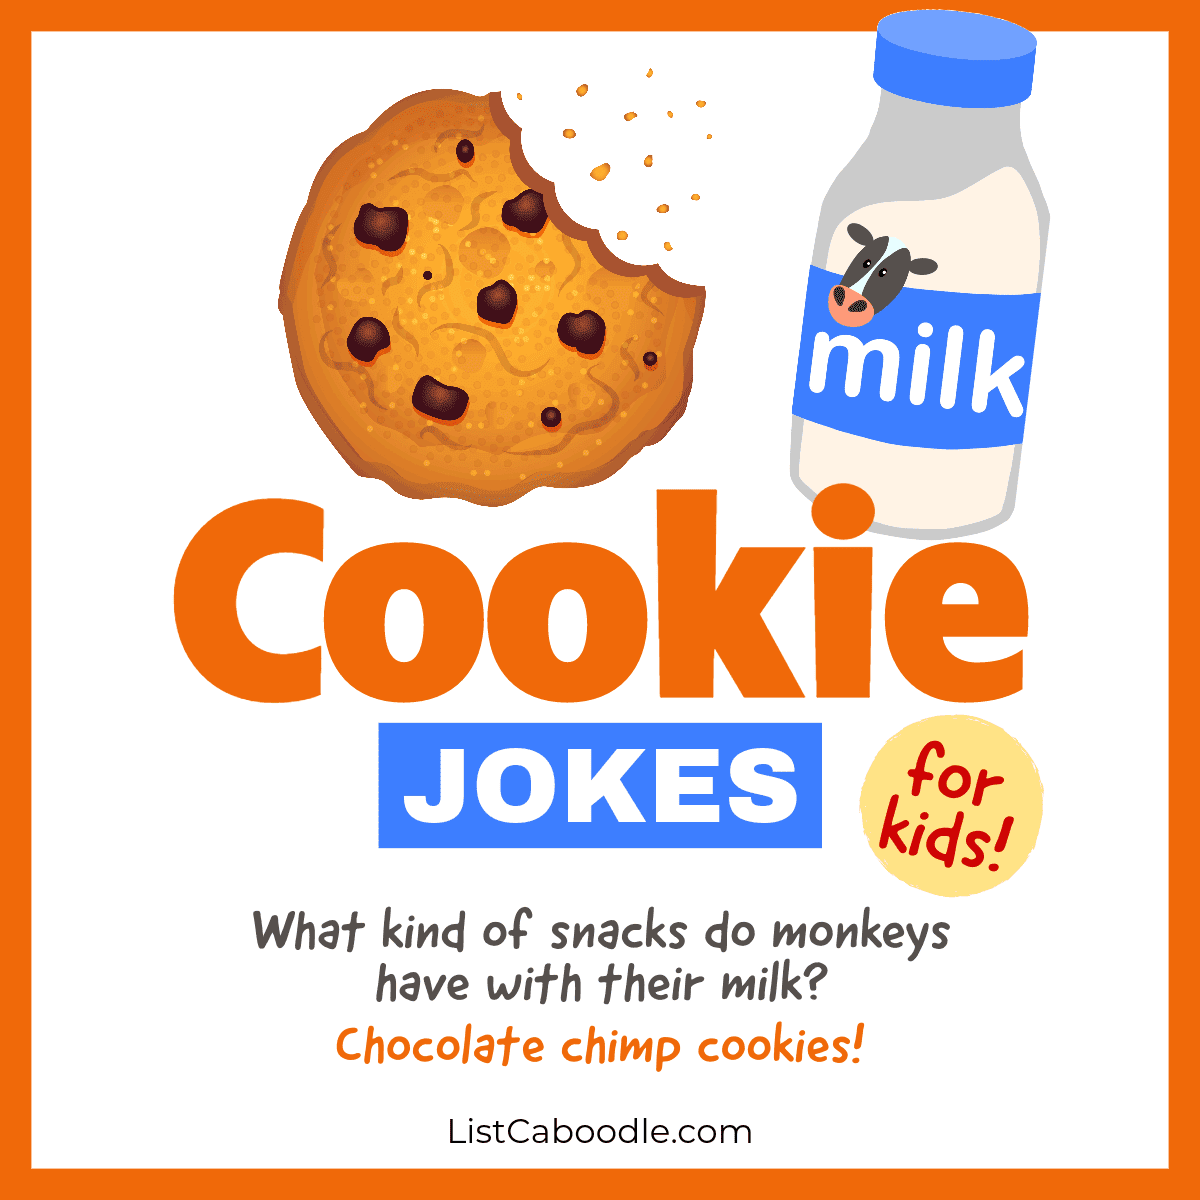 Cookie jokes for kids